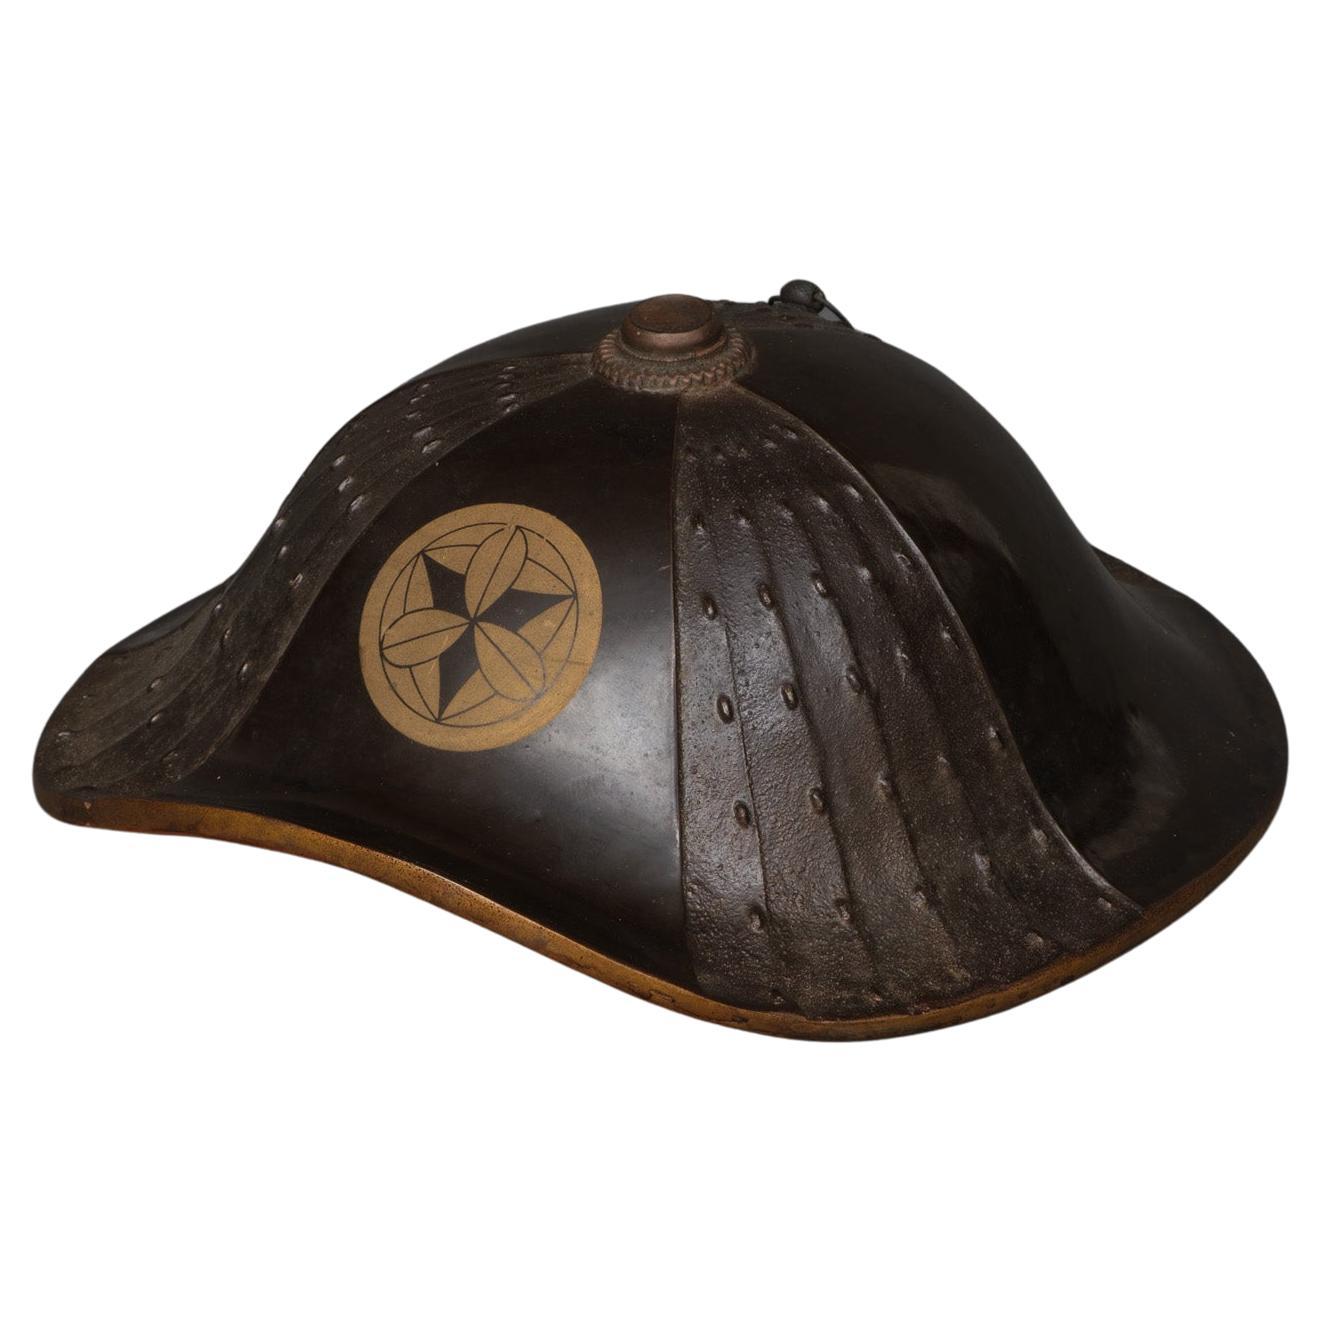 Japanese black lacquer bajô jingasa 馬上陣笠 (samurai hat) with family crest